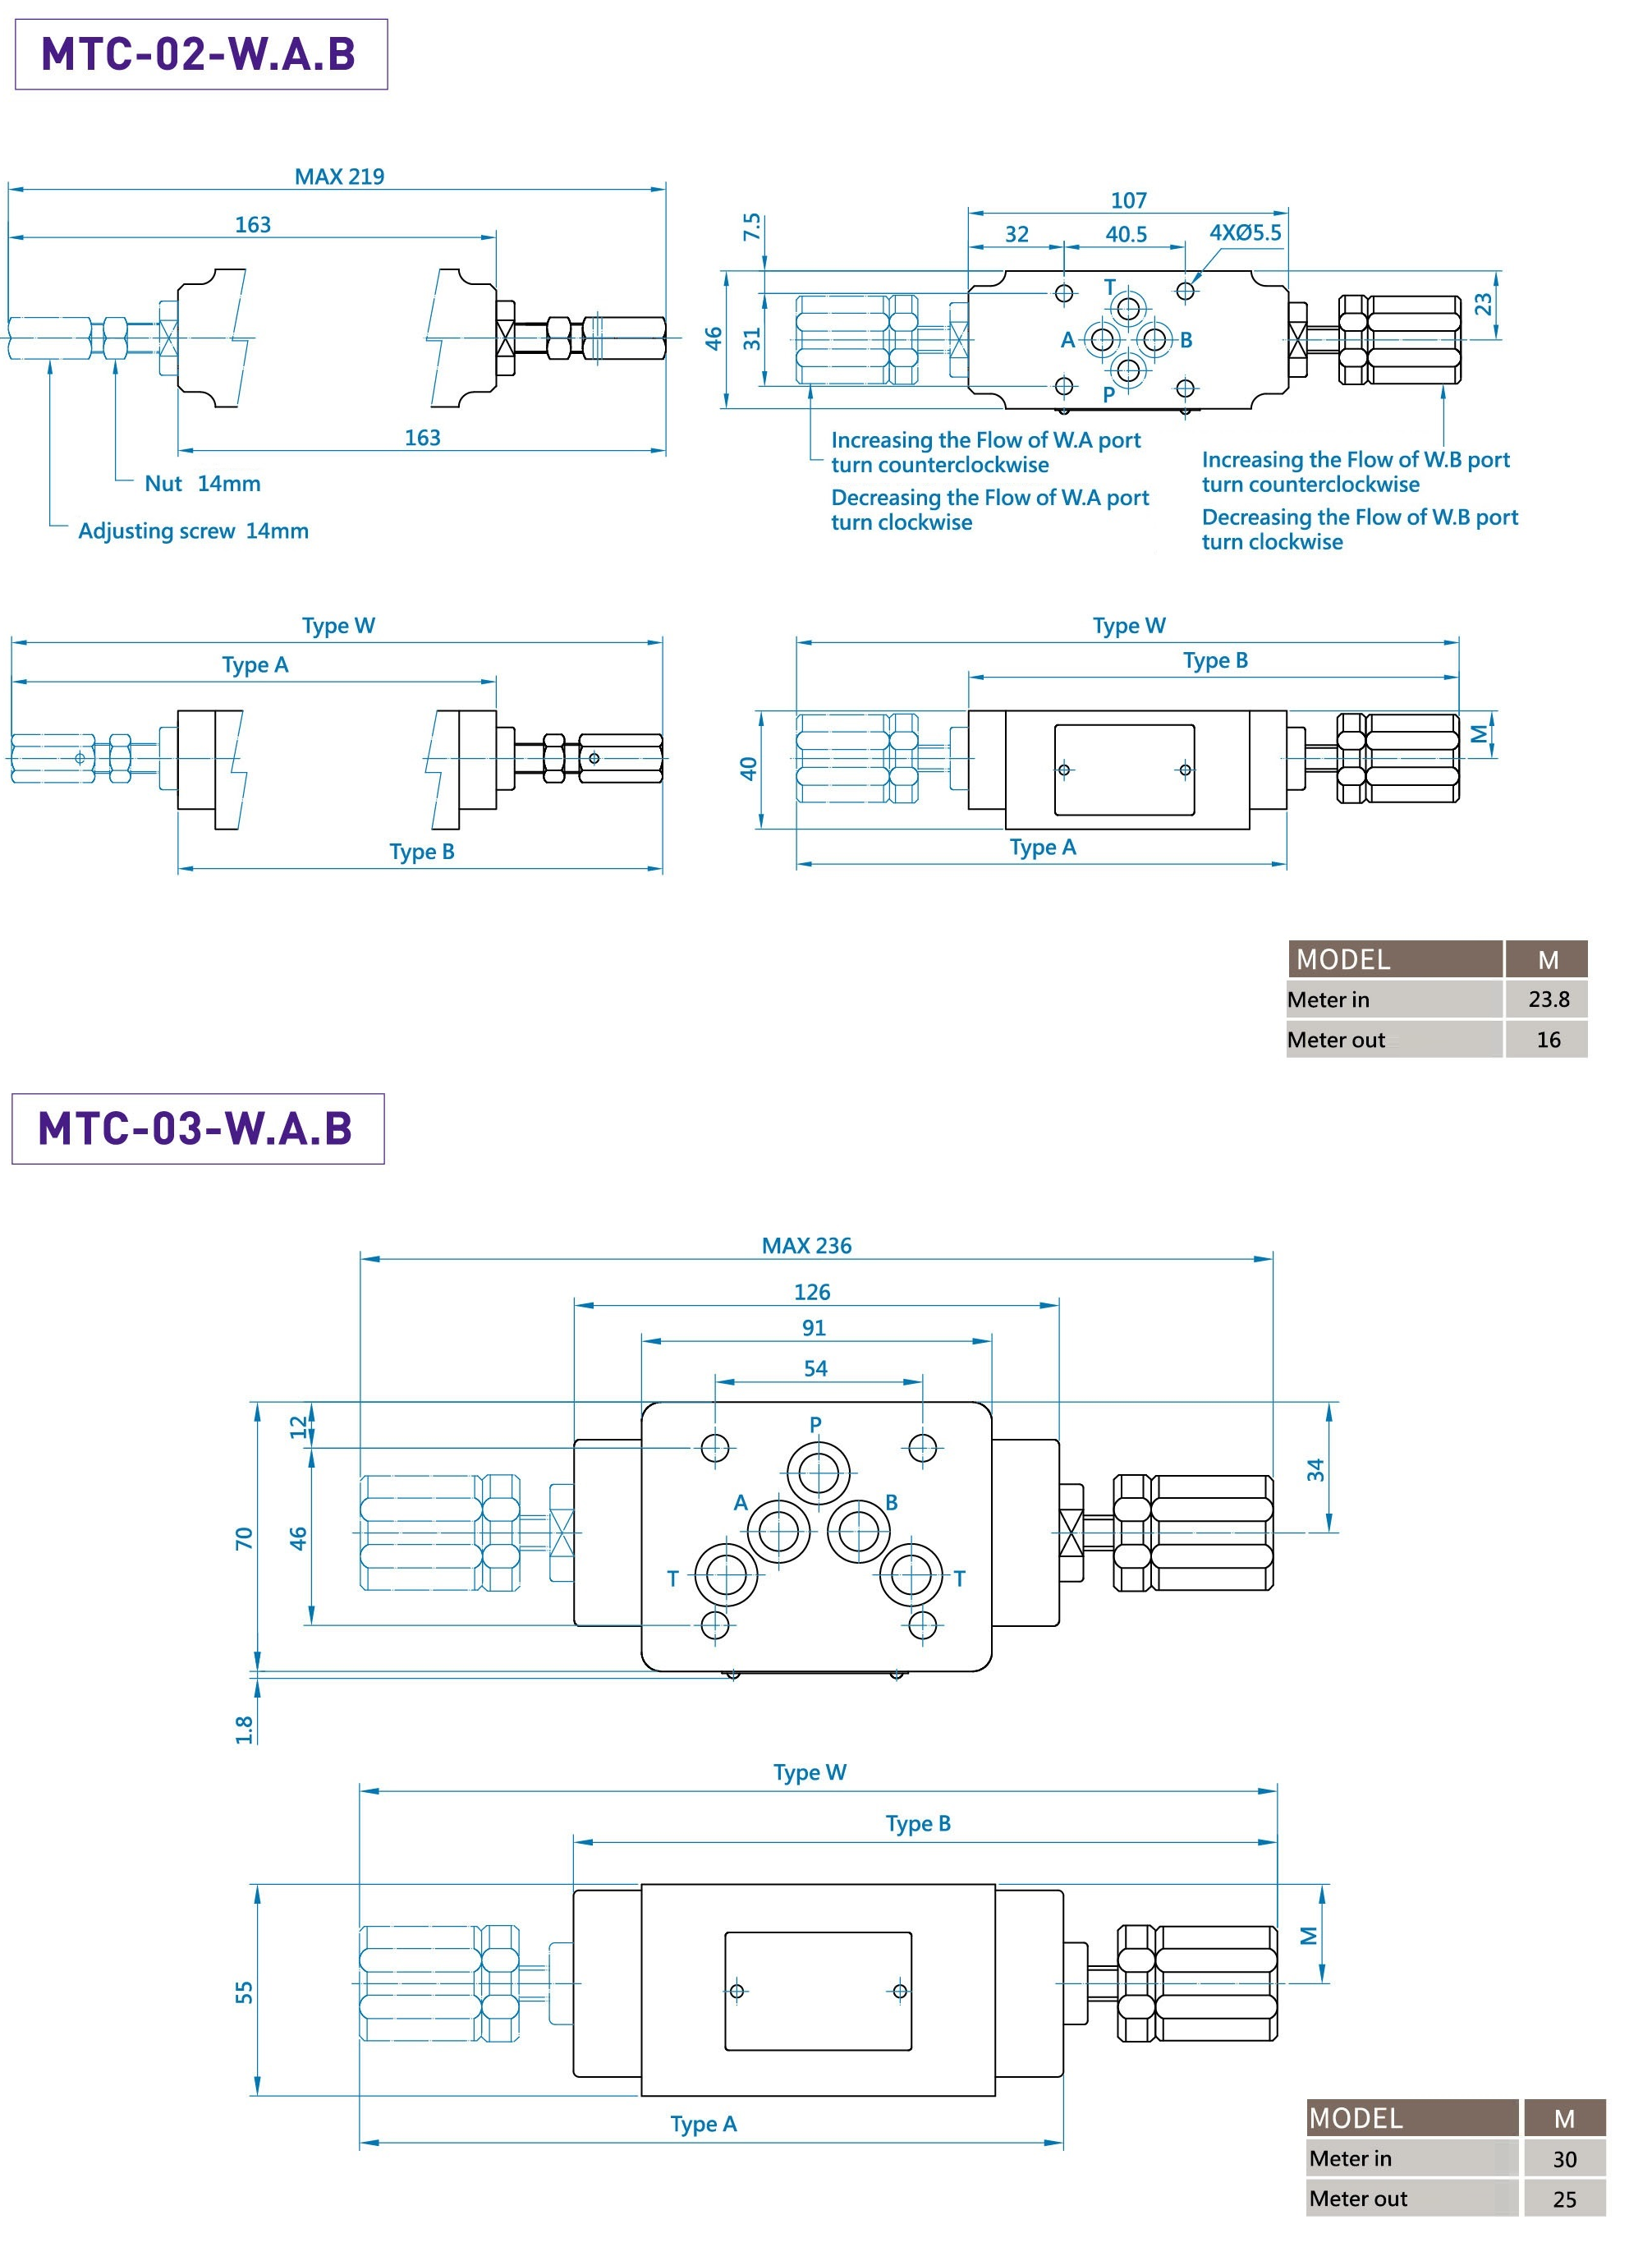 CML Throttle Modular &amp; Reprehendo Valvae MTC 02 W A B mensurae